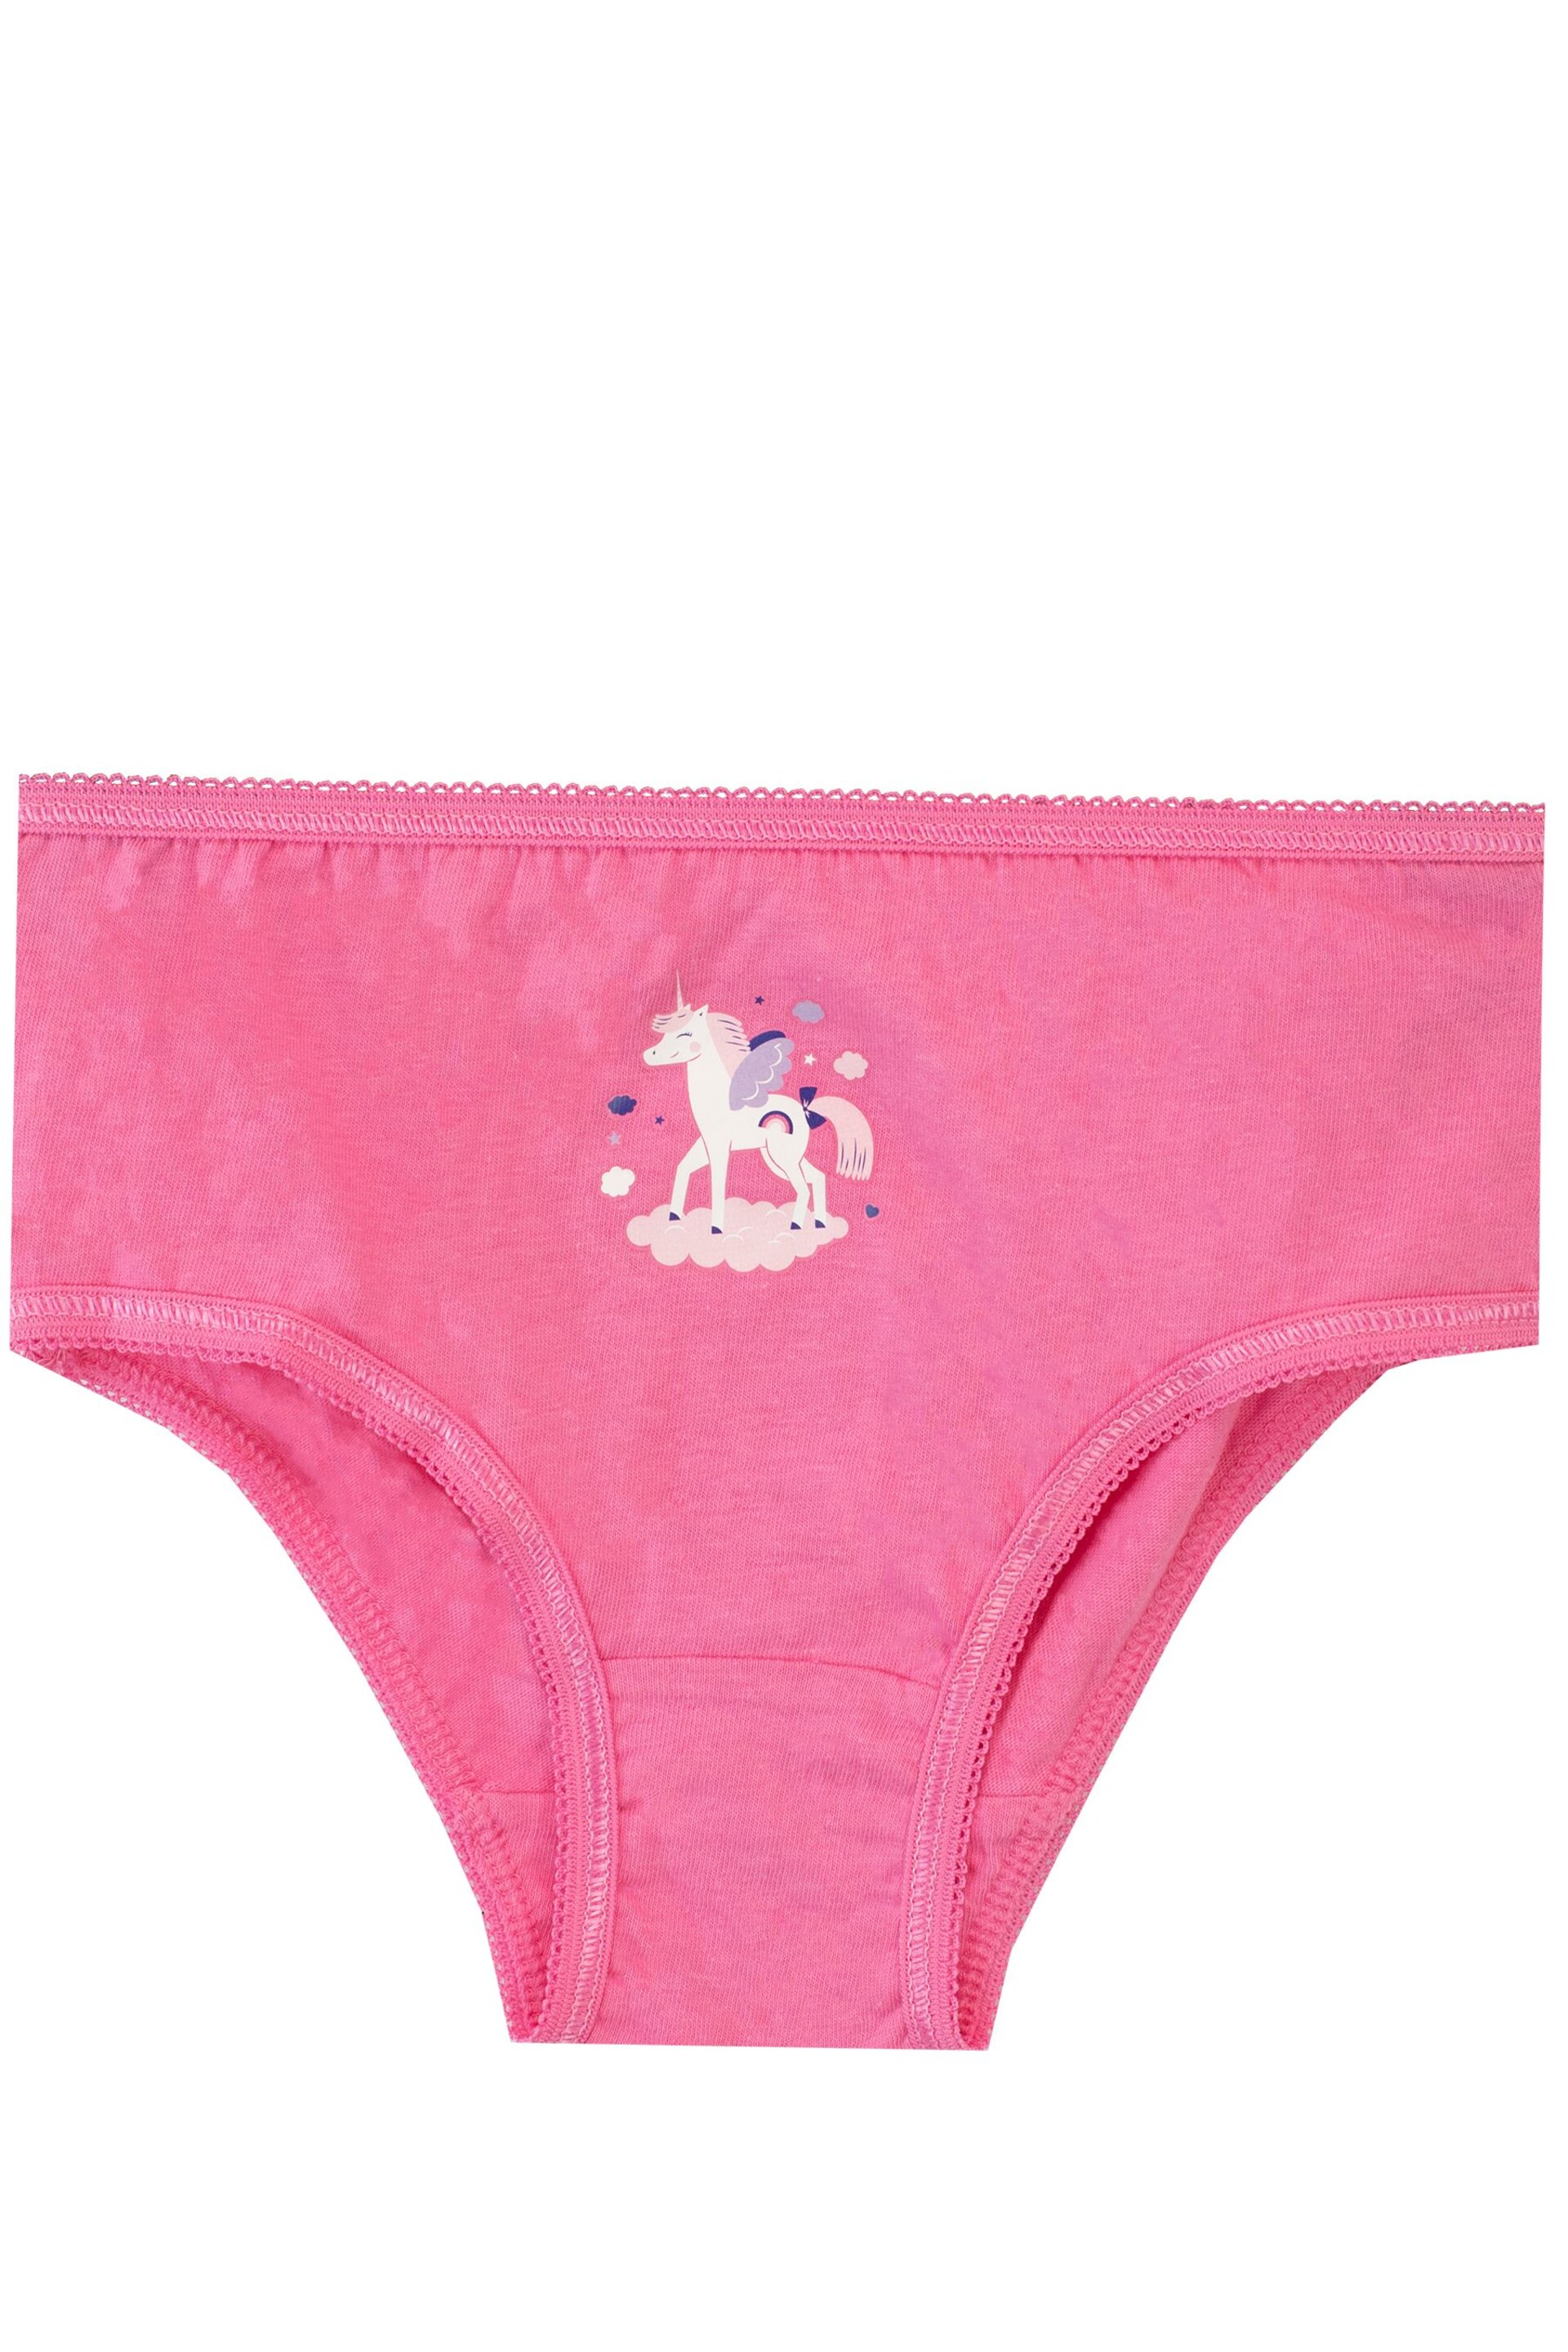 Harry Bear Pink Girls Unicorn Underwear 5 Packs - Image 5 of 5